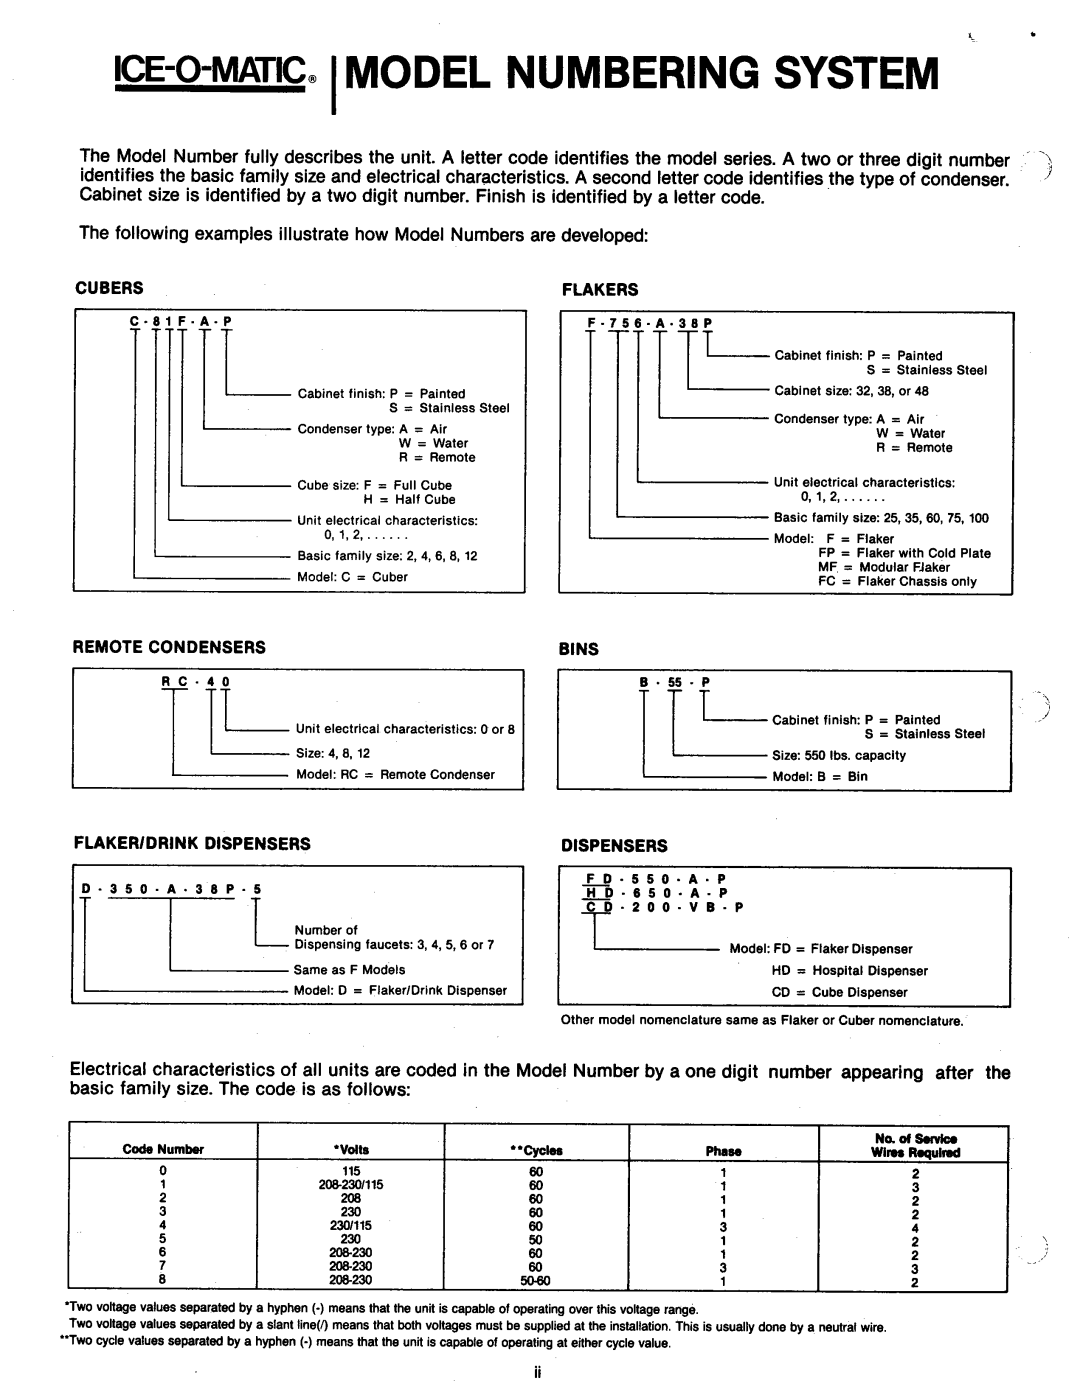 Ice-O-Matic MF2005 manual 